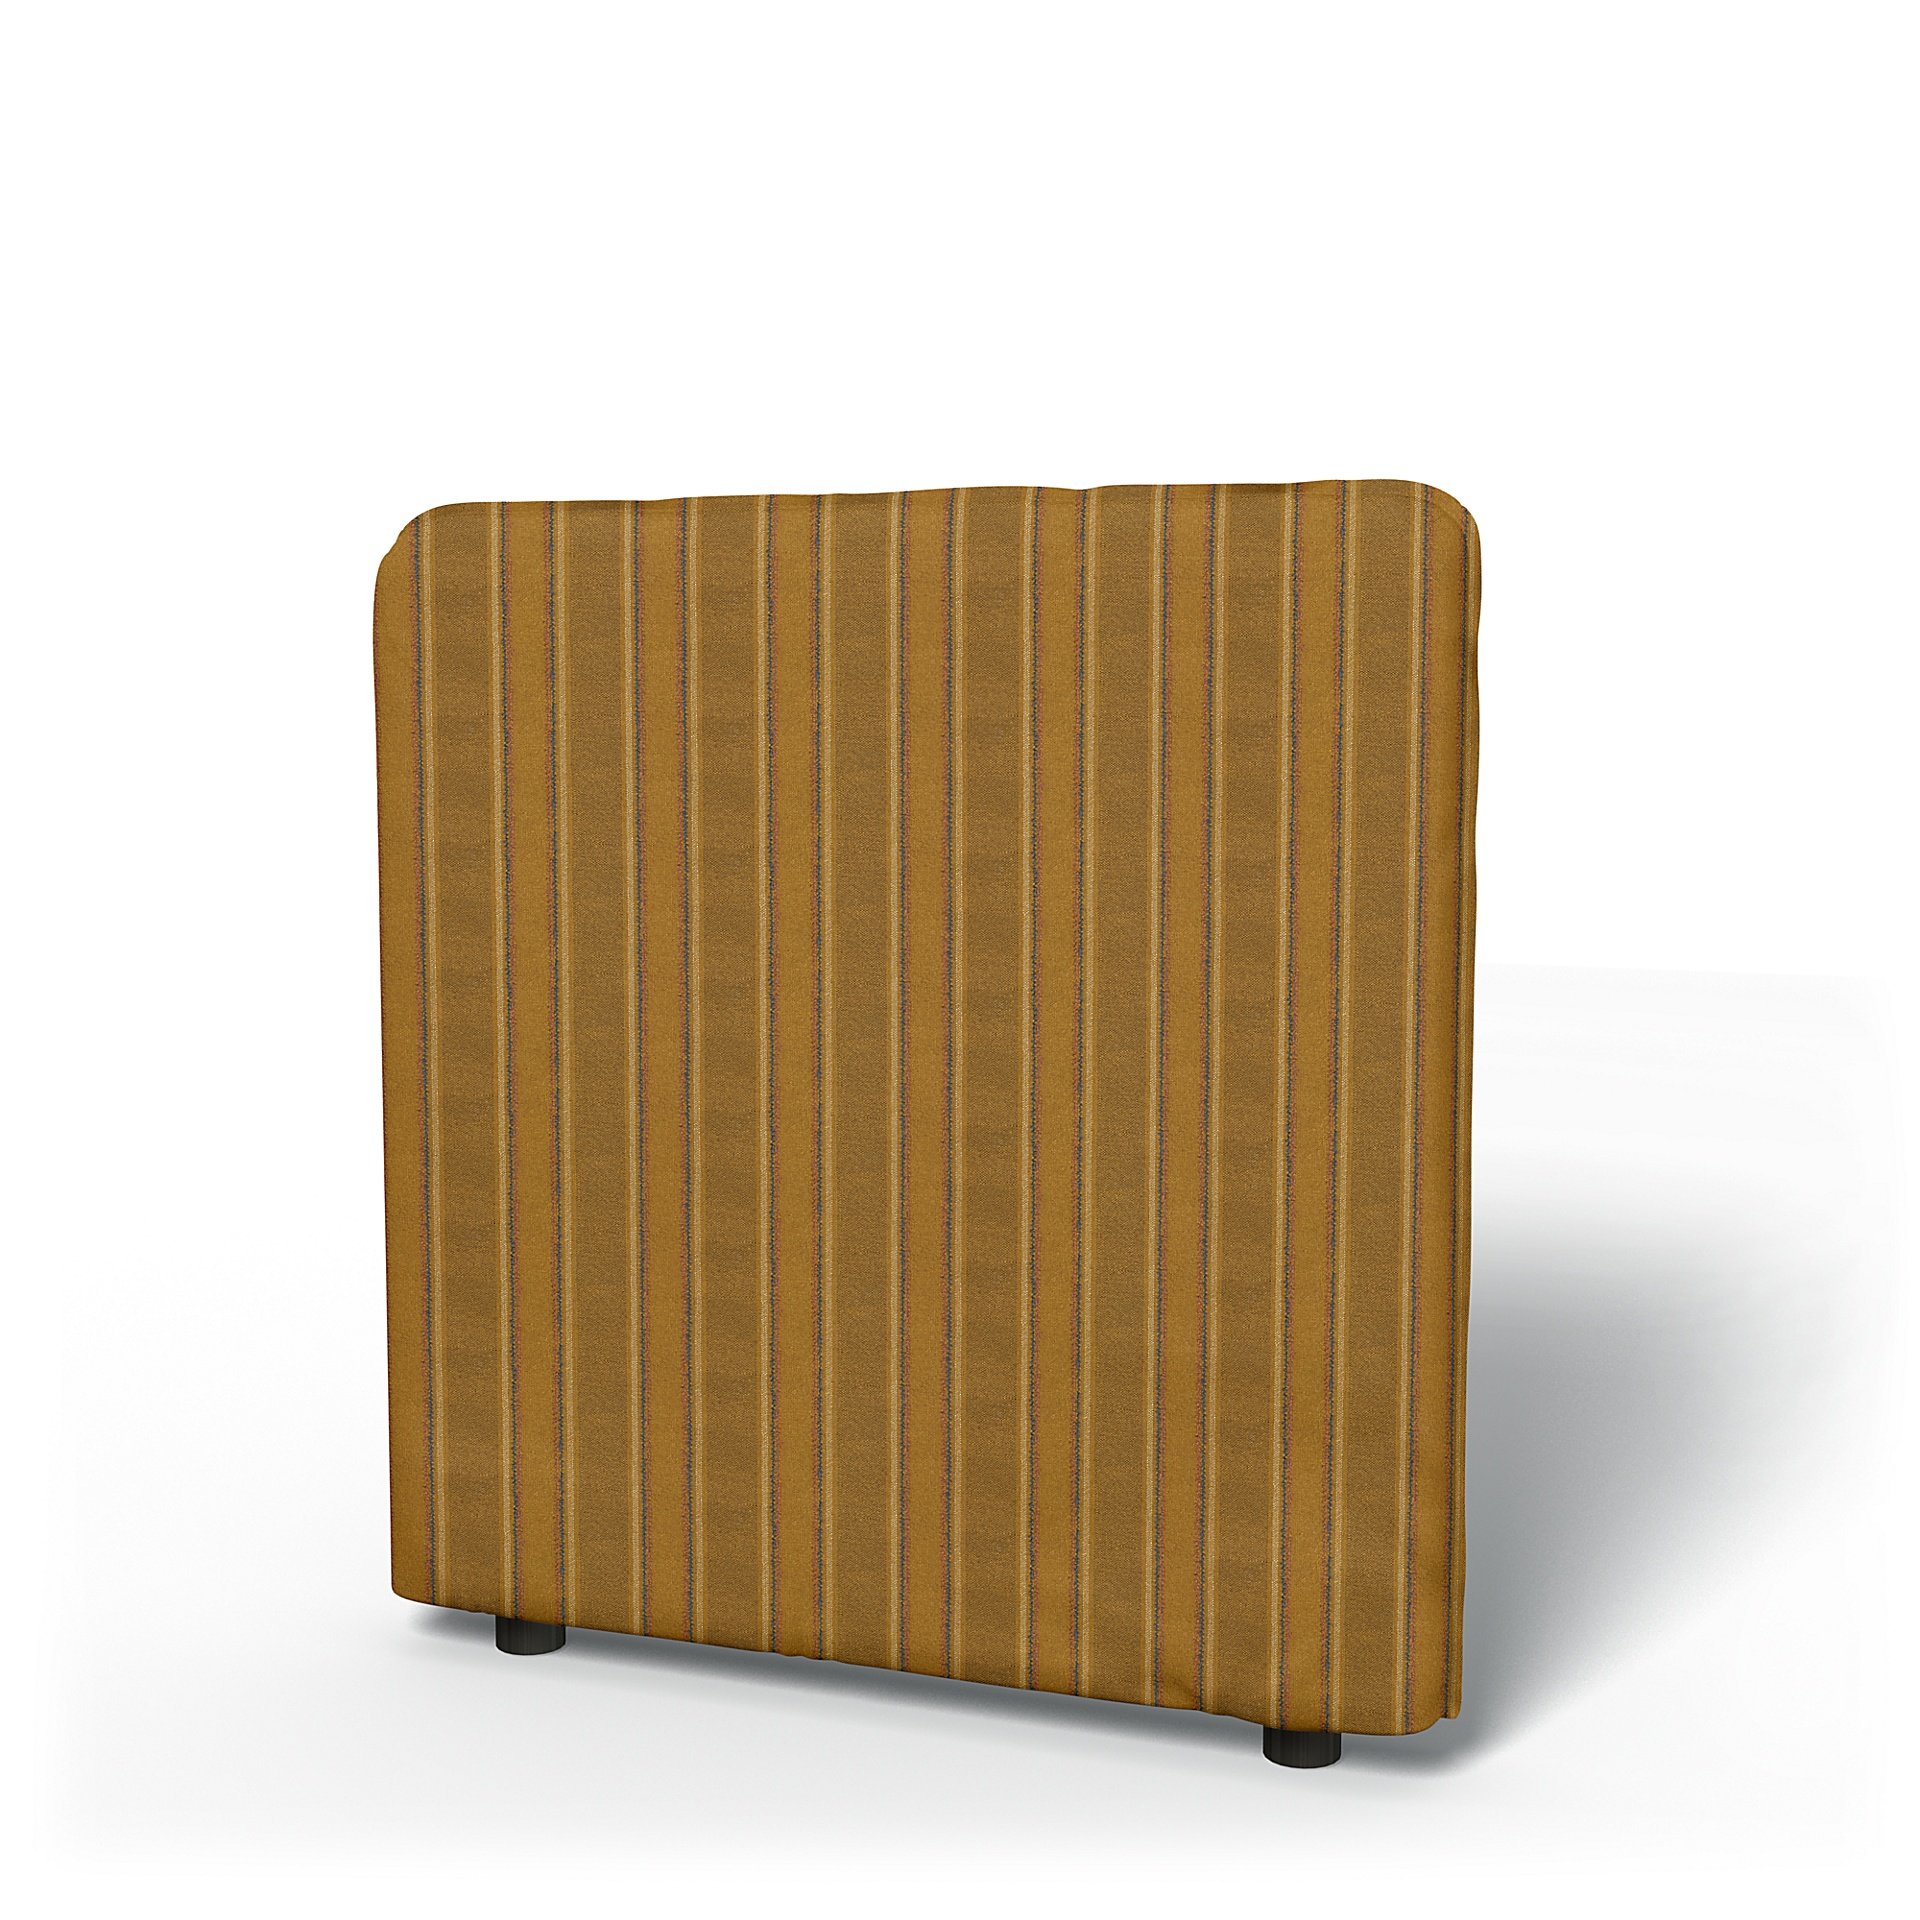 IKEA - Vallentuna Low Backrest Cover 80x80cm 32x32in, Mustard Stripe, Cotton - Bemz